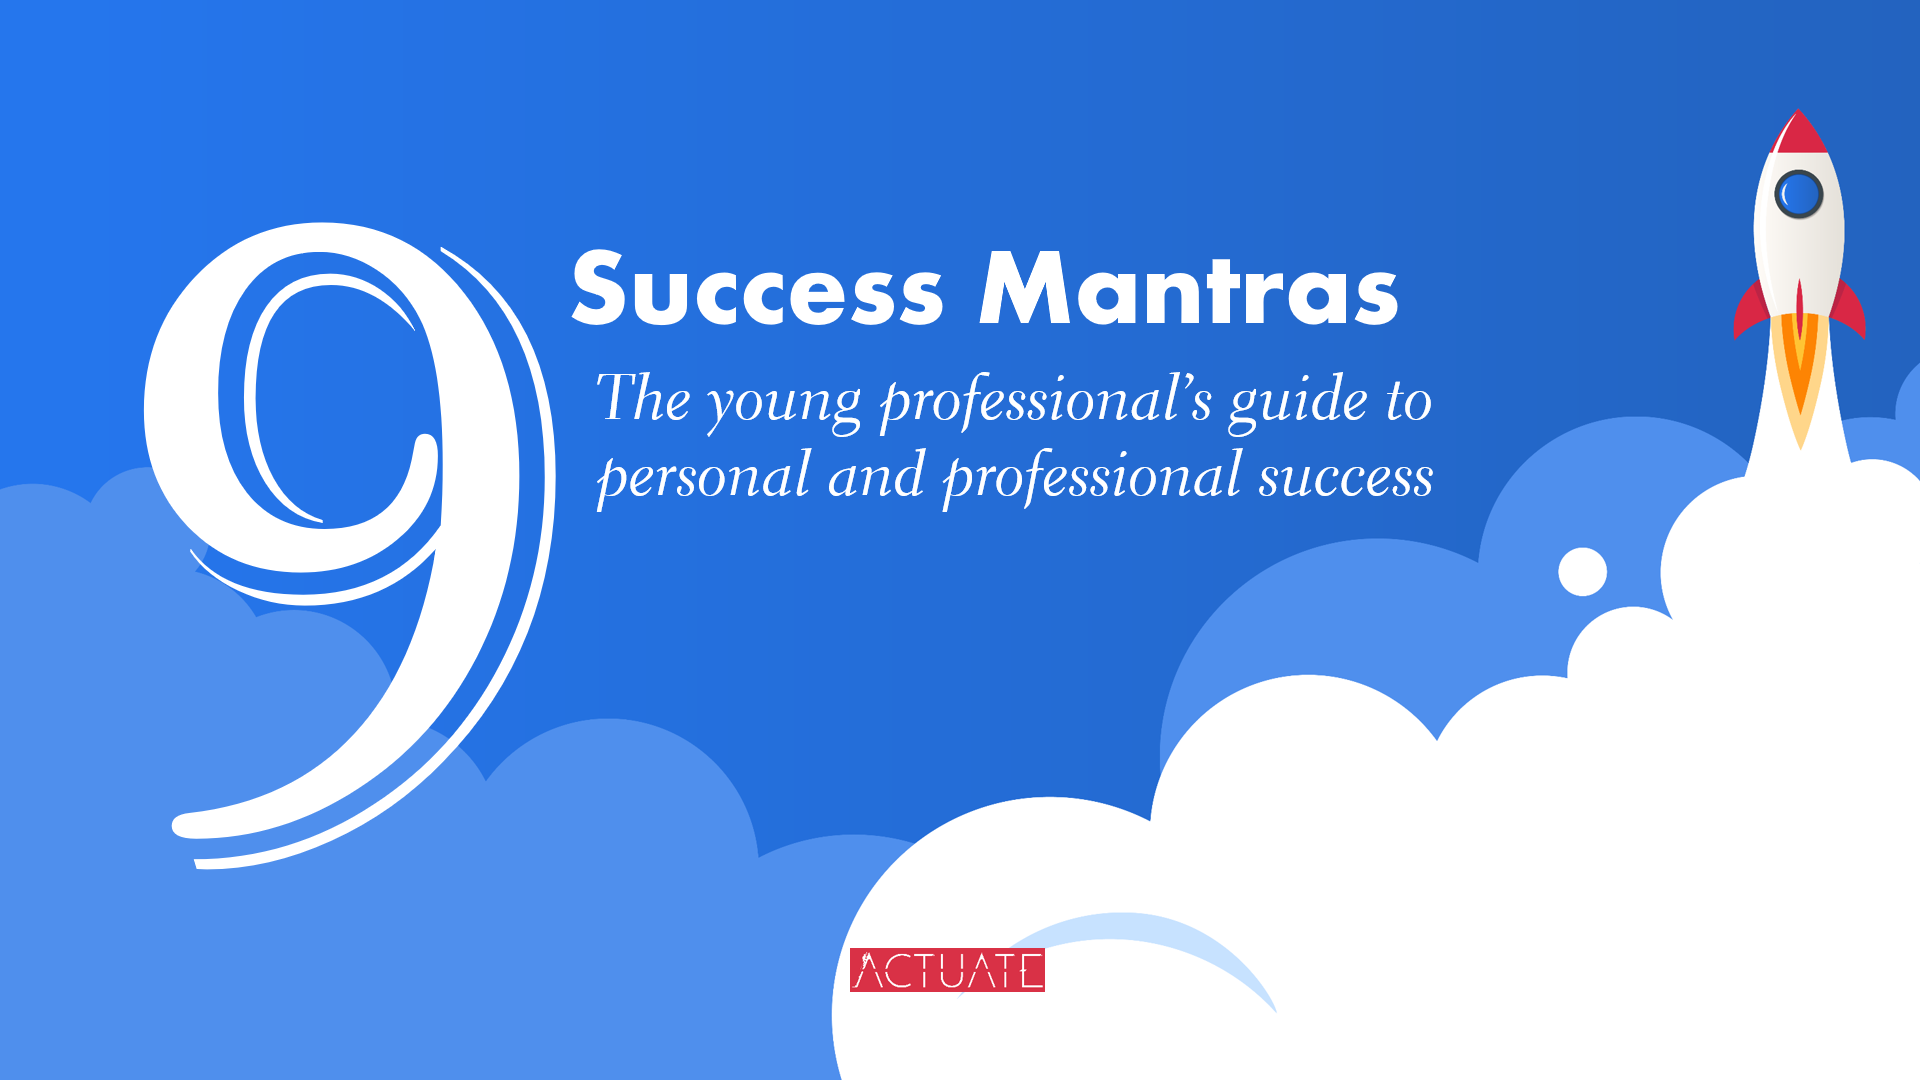 Nine Success Mantras